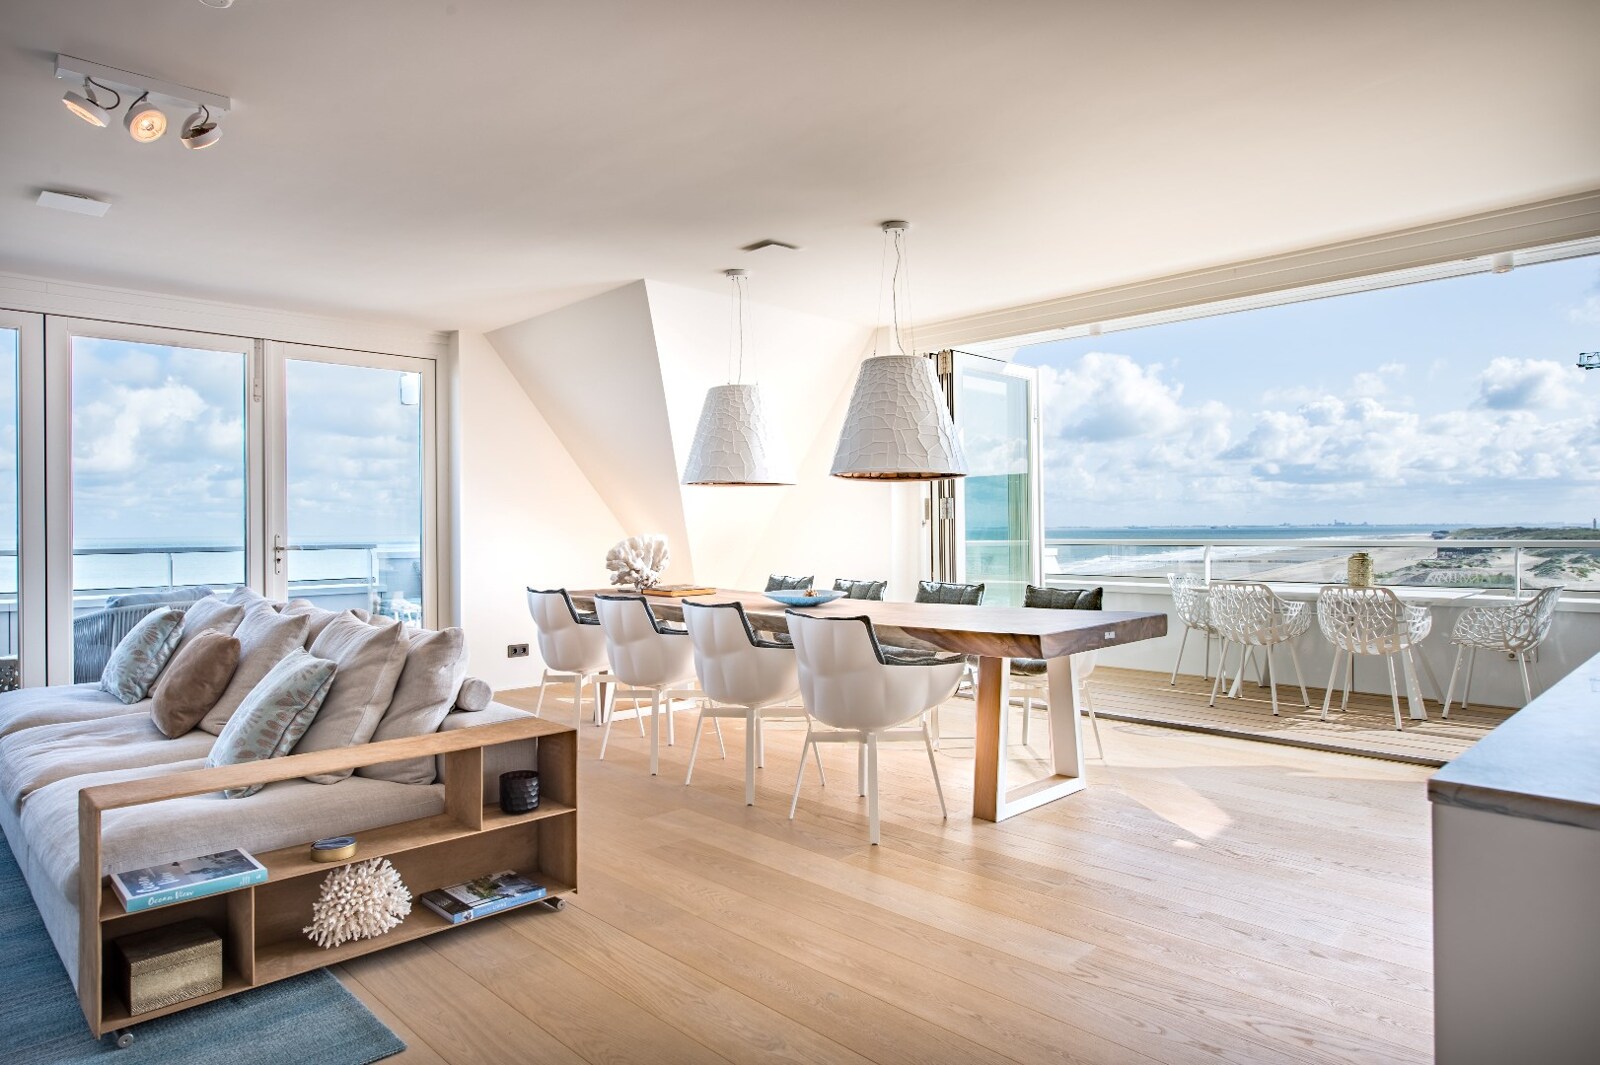 Cadzand - Appartement exclusif profitant de belles vues sur la mer  1